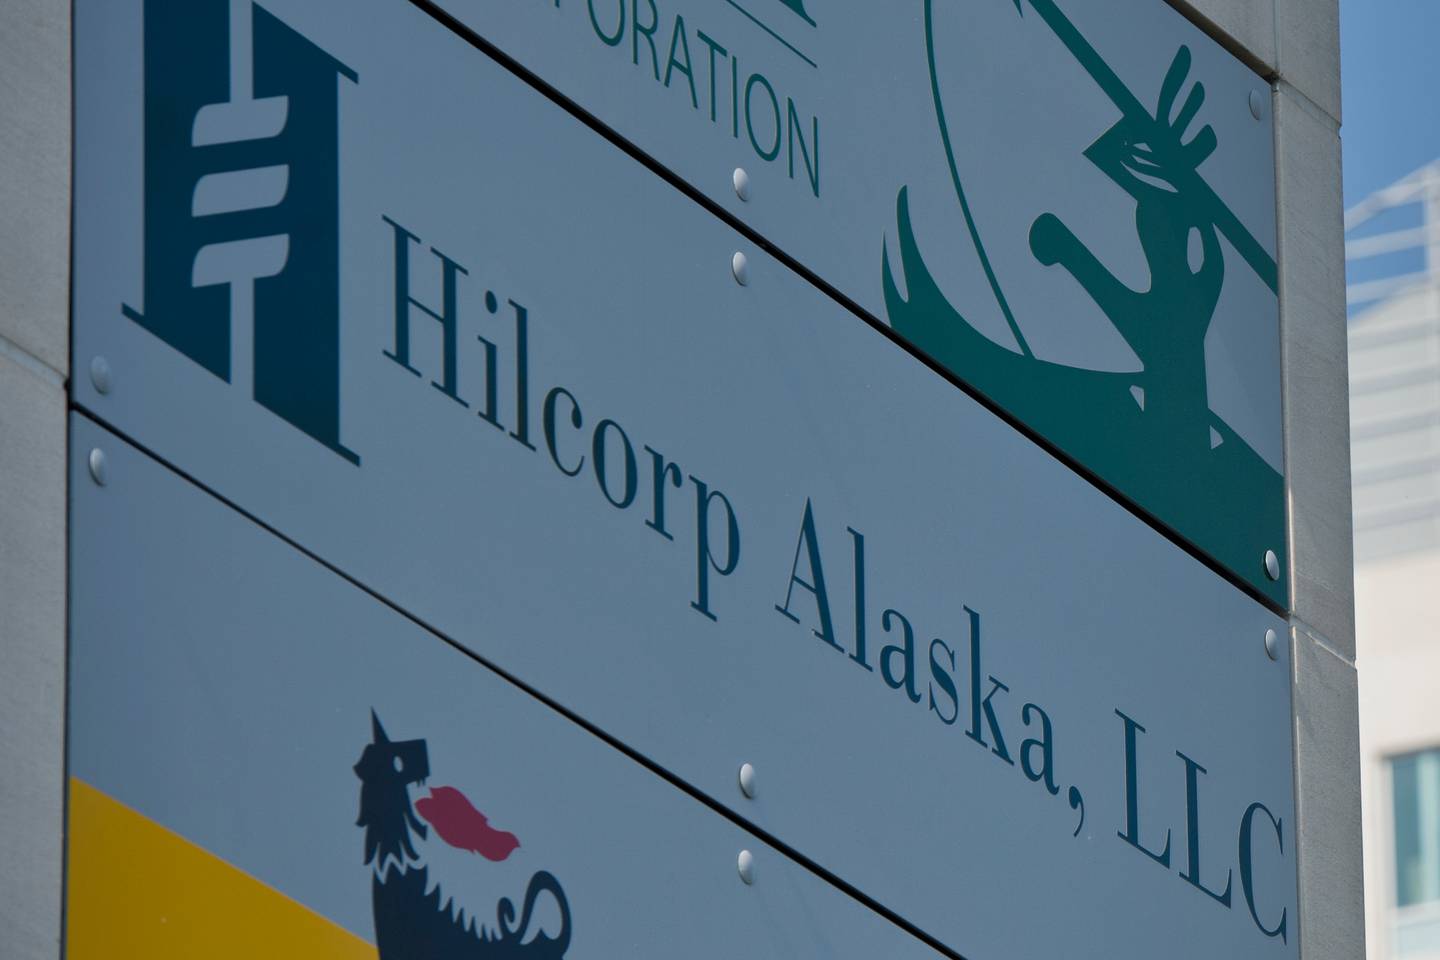 Hillcorp Alaska, JL Tower